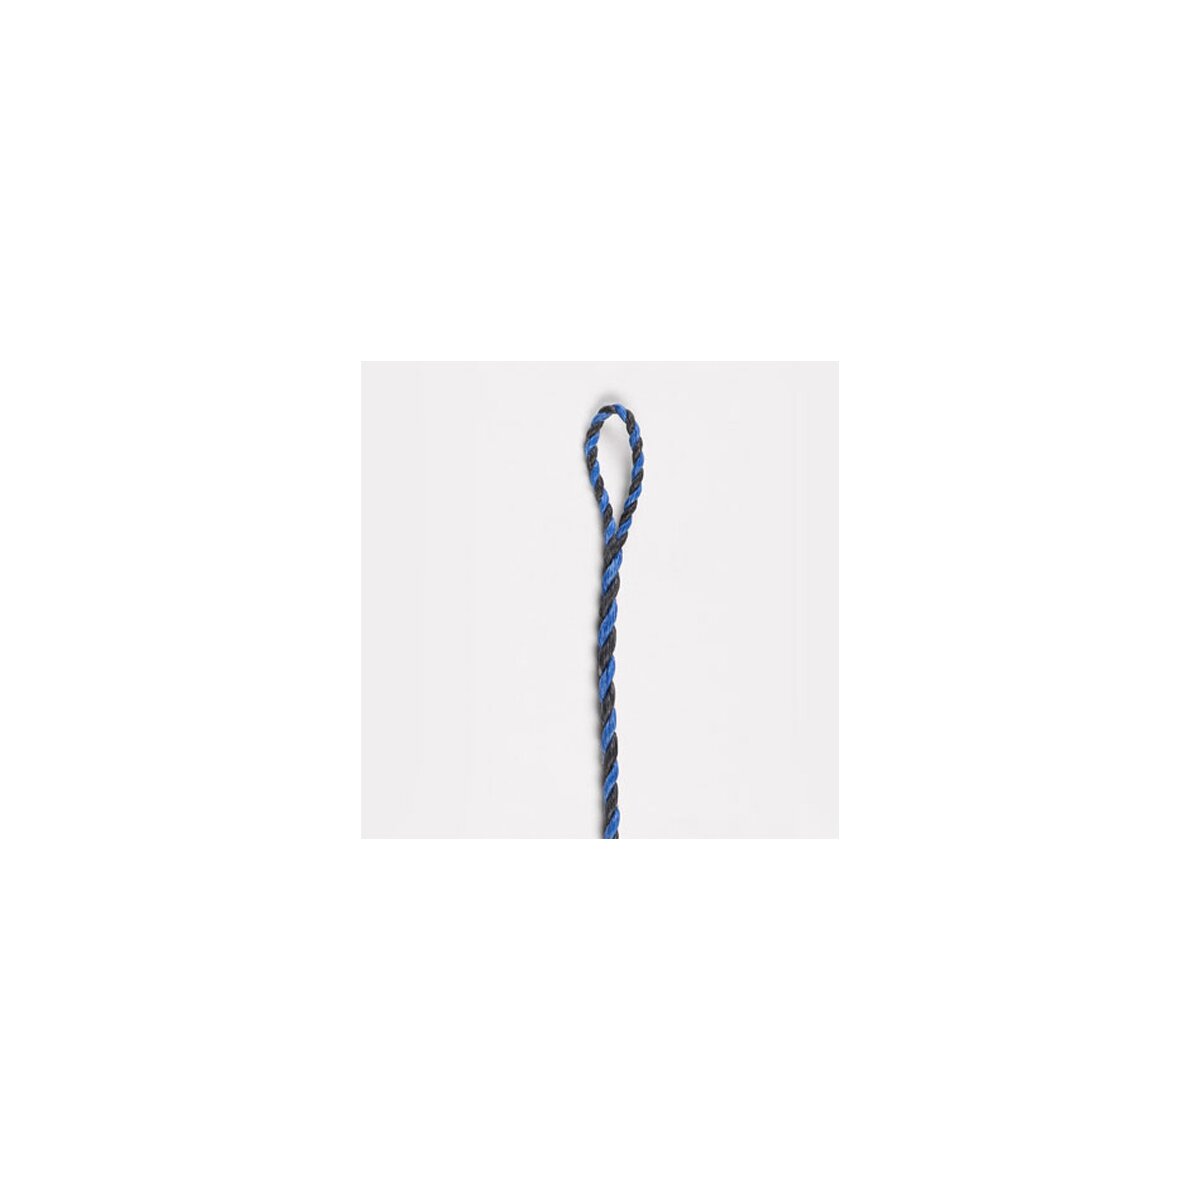 Flemish splice string for 58 inch bows